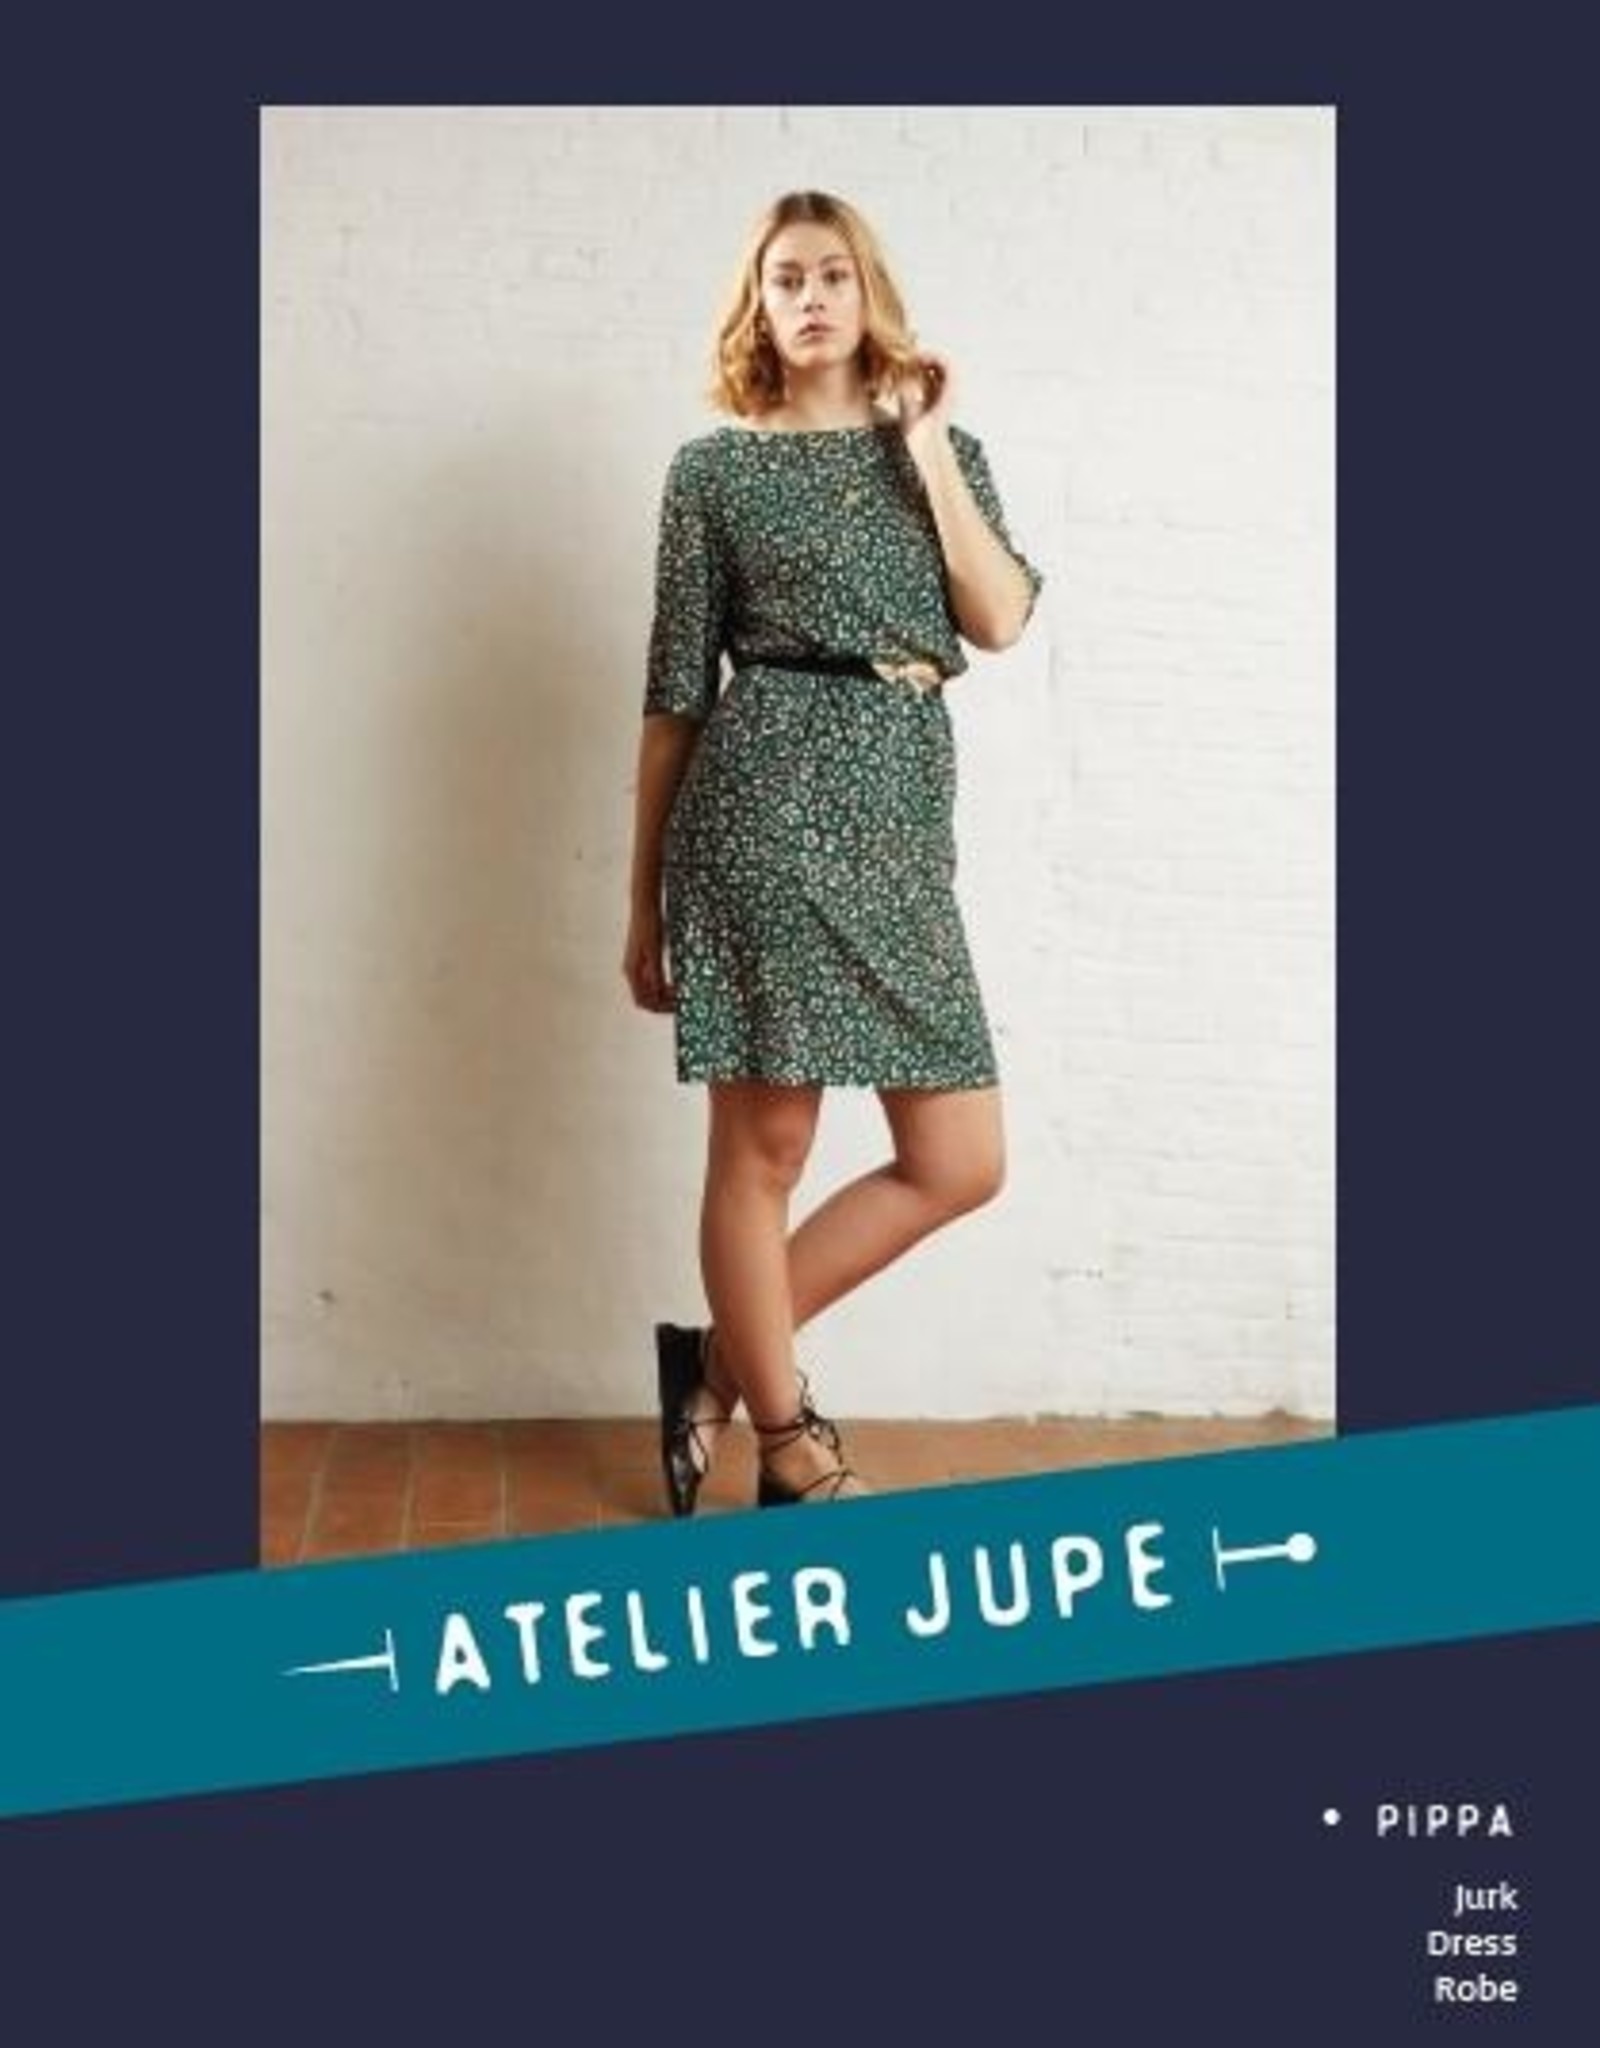 Pippa jurk - Atelier Jupe